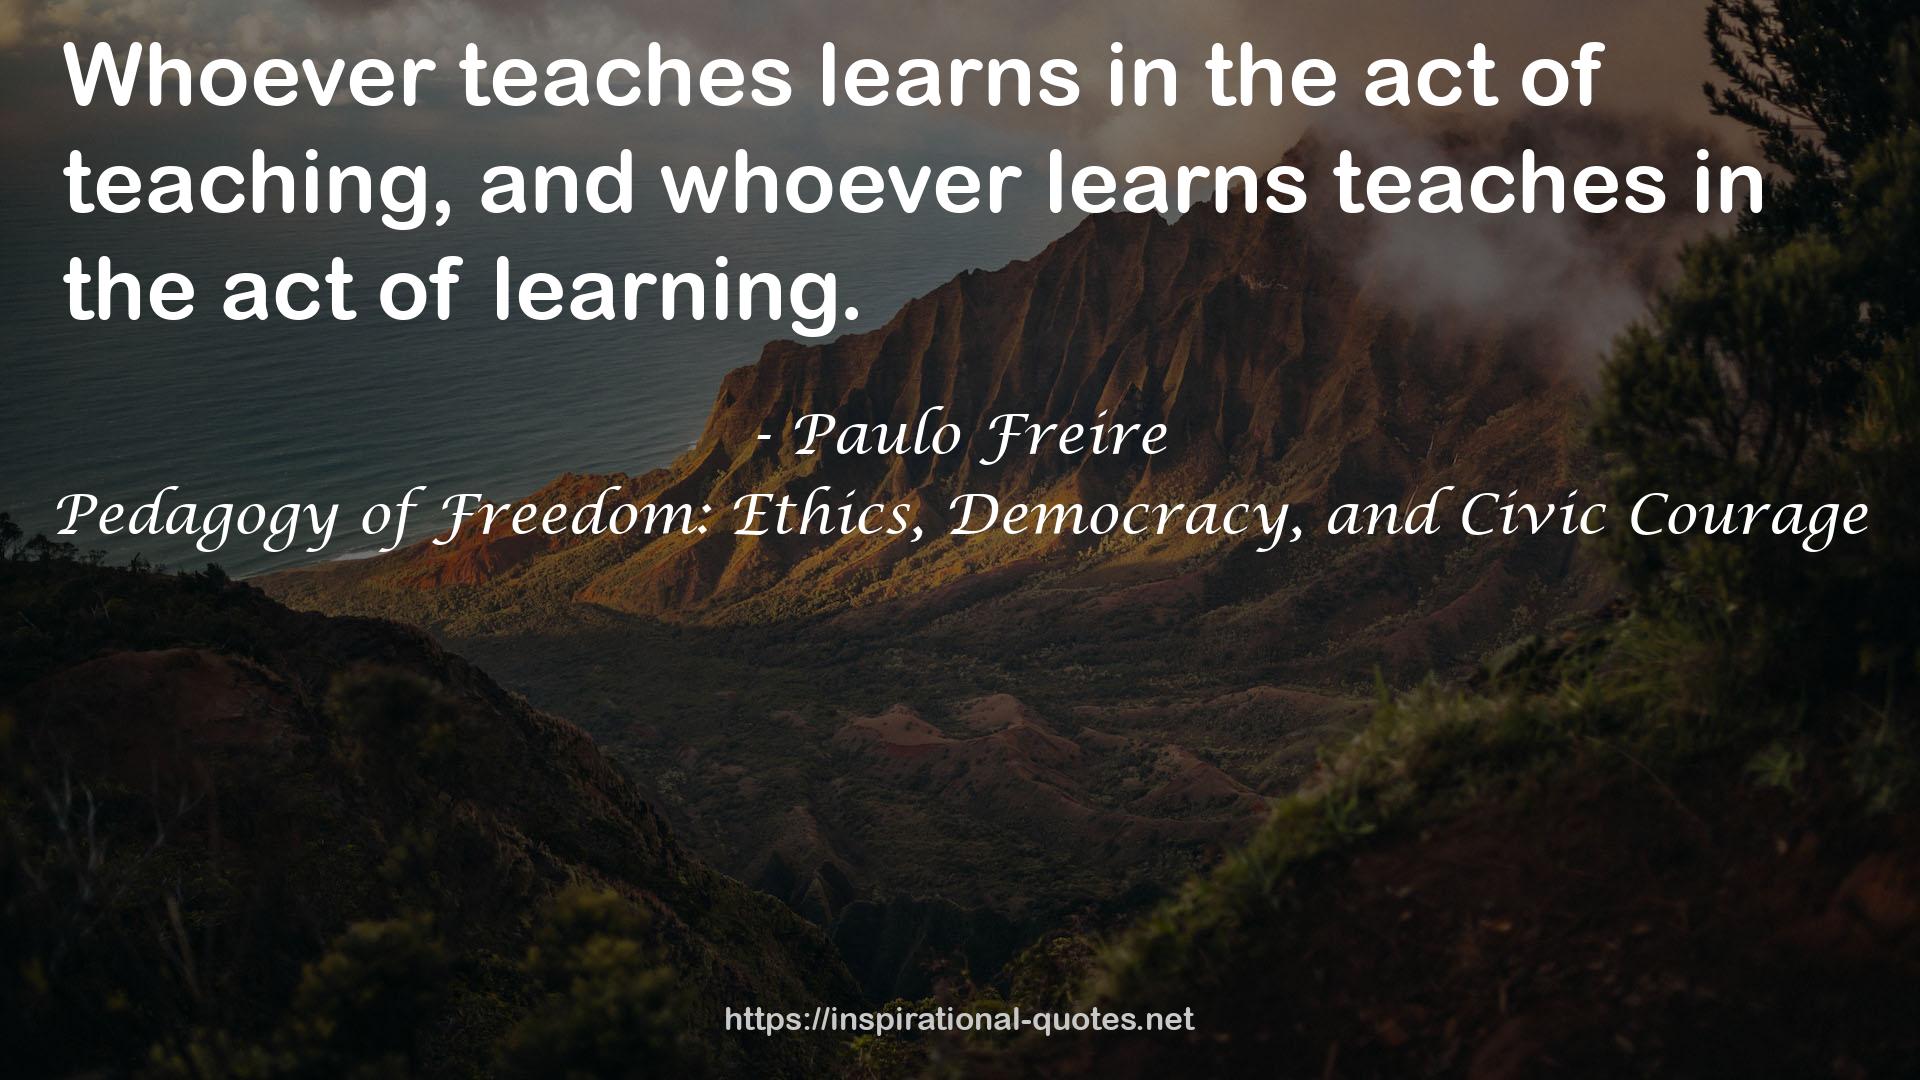 Pedagogy of Freedom: Ethics, Democracy, and Civic Courage QUOTES